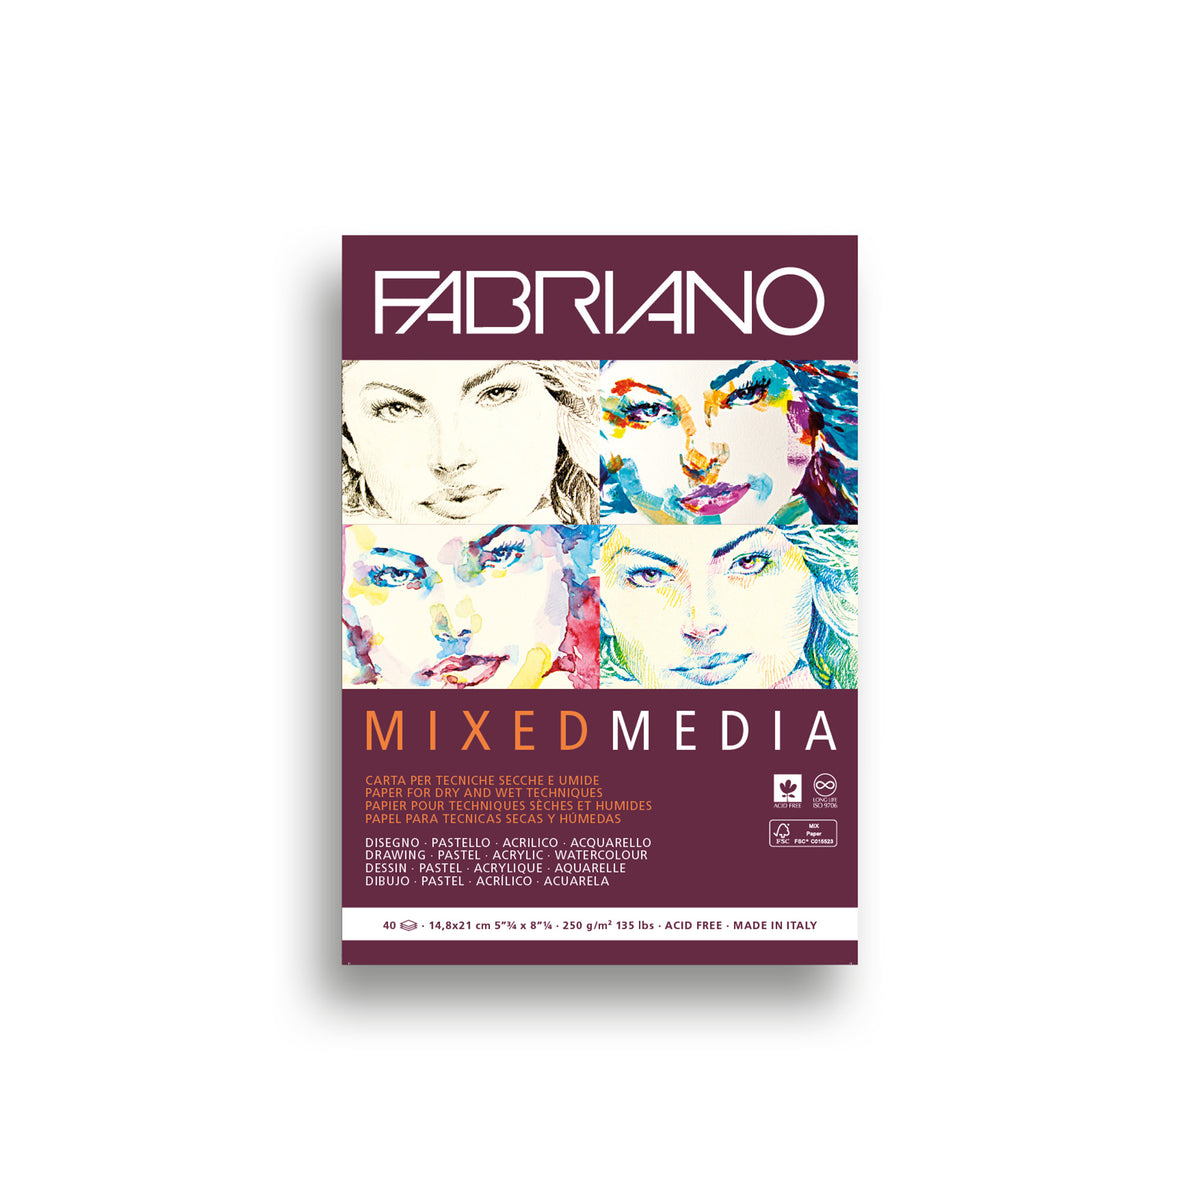 Fabriano Mixed Media Bloc 250g/m2